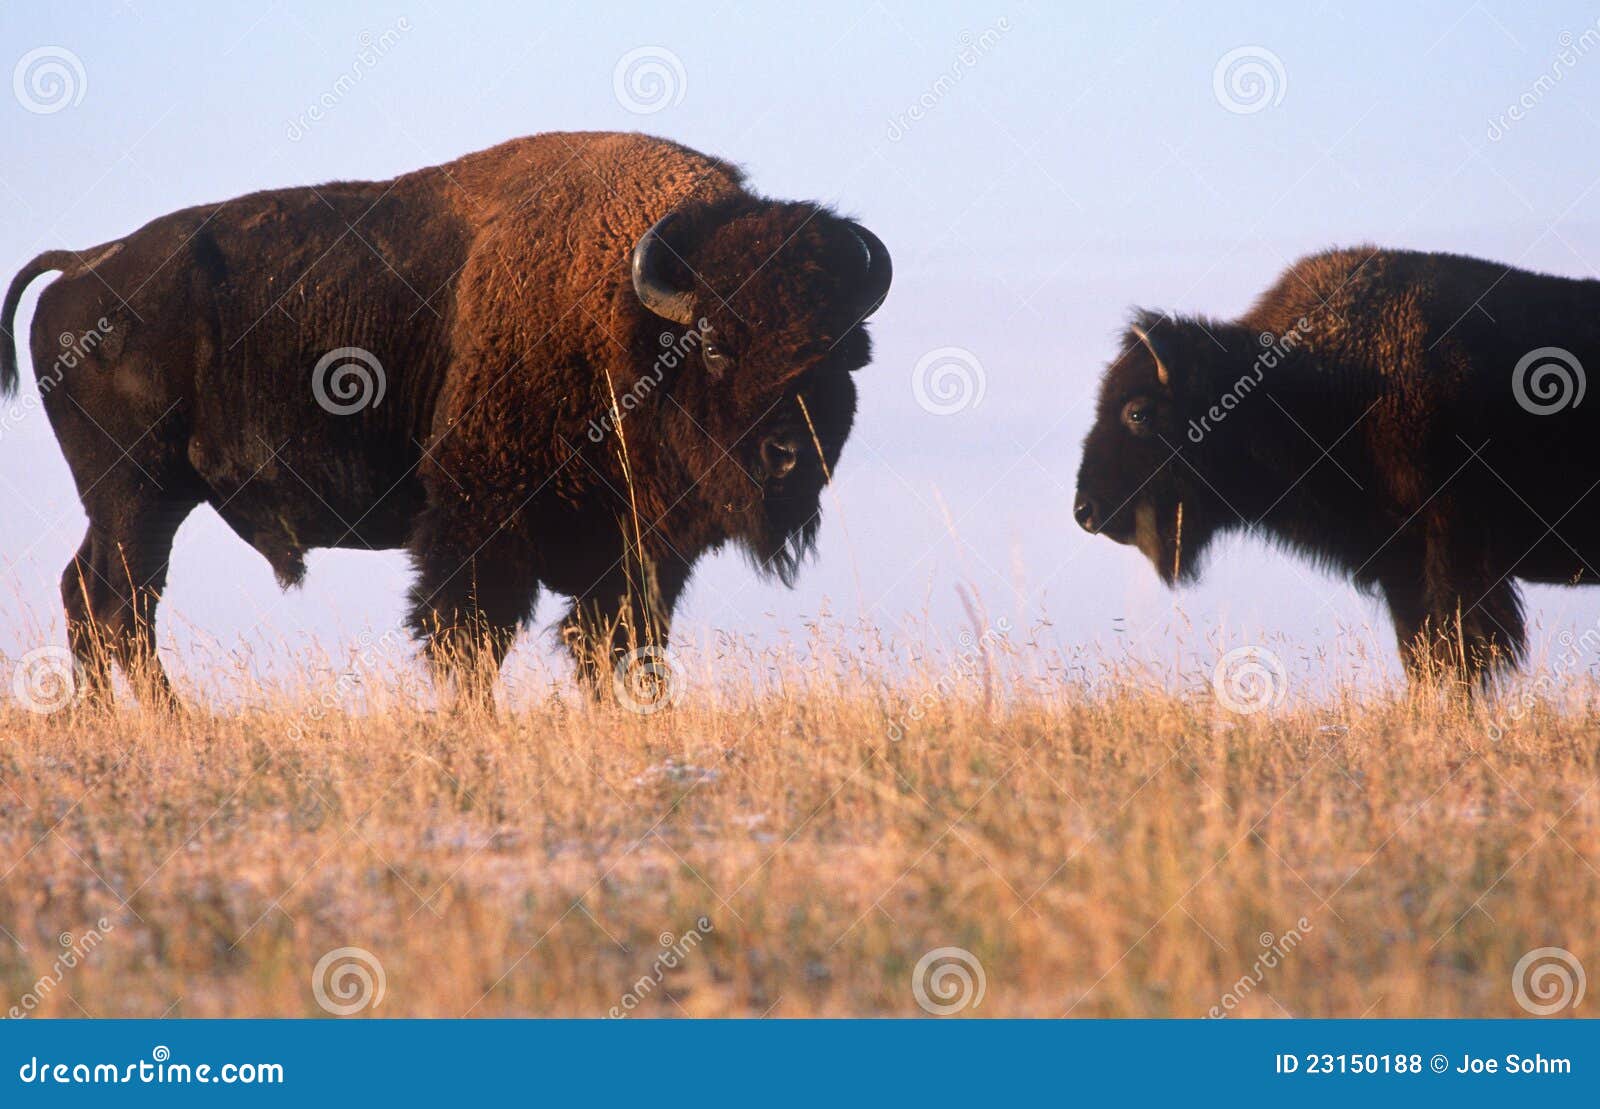 Buffalo the Range, Nebraska Stock Photo - Image of america, hoofed: